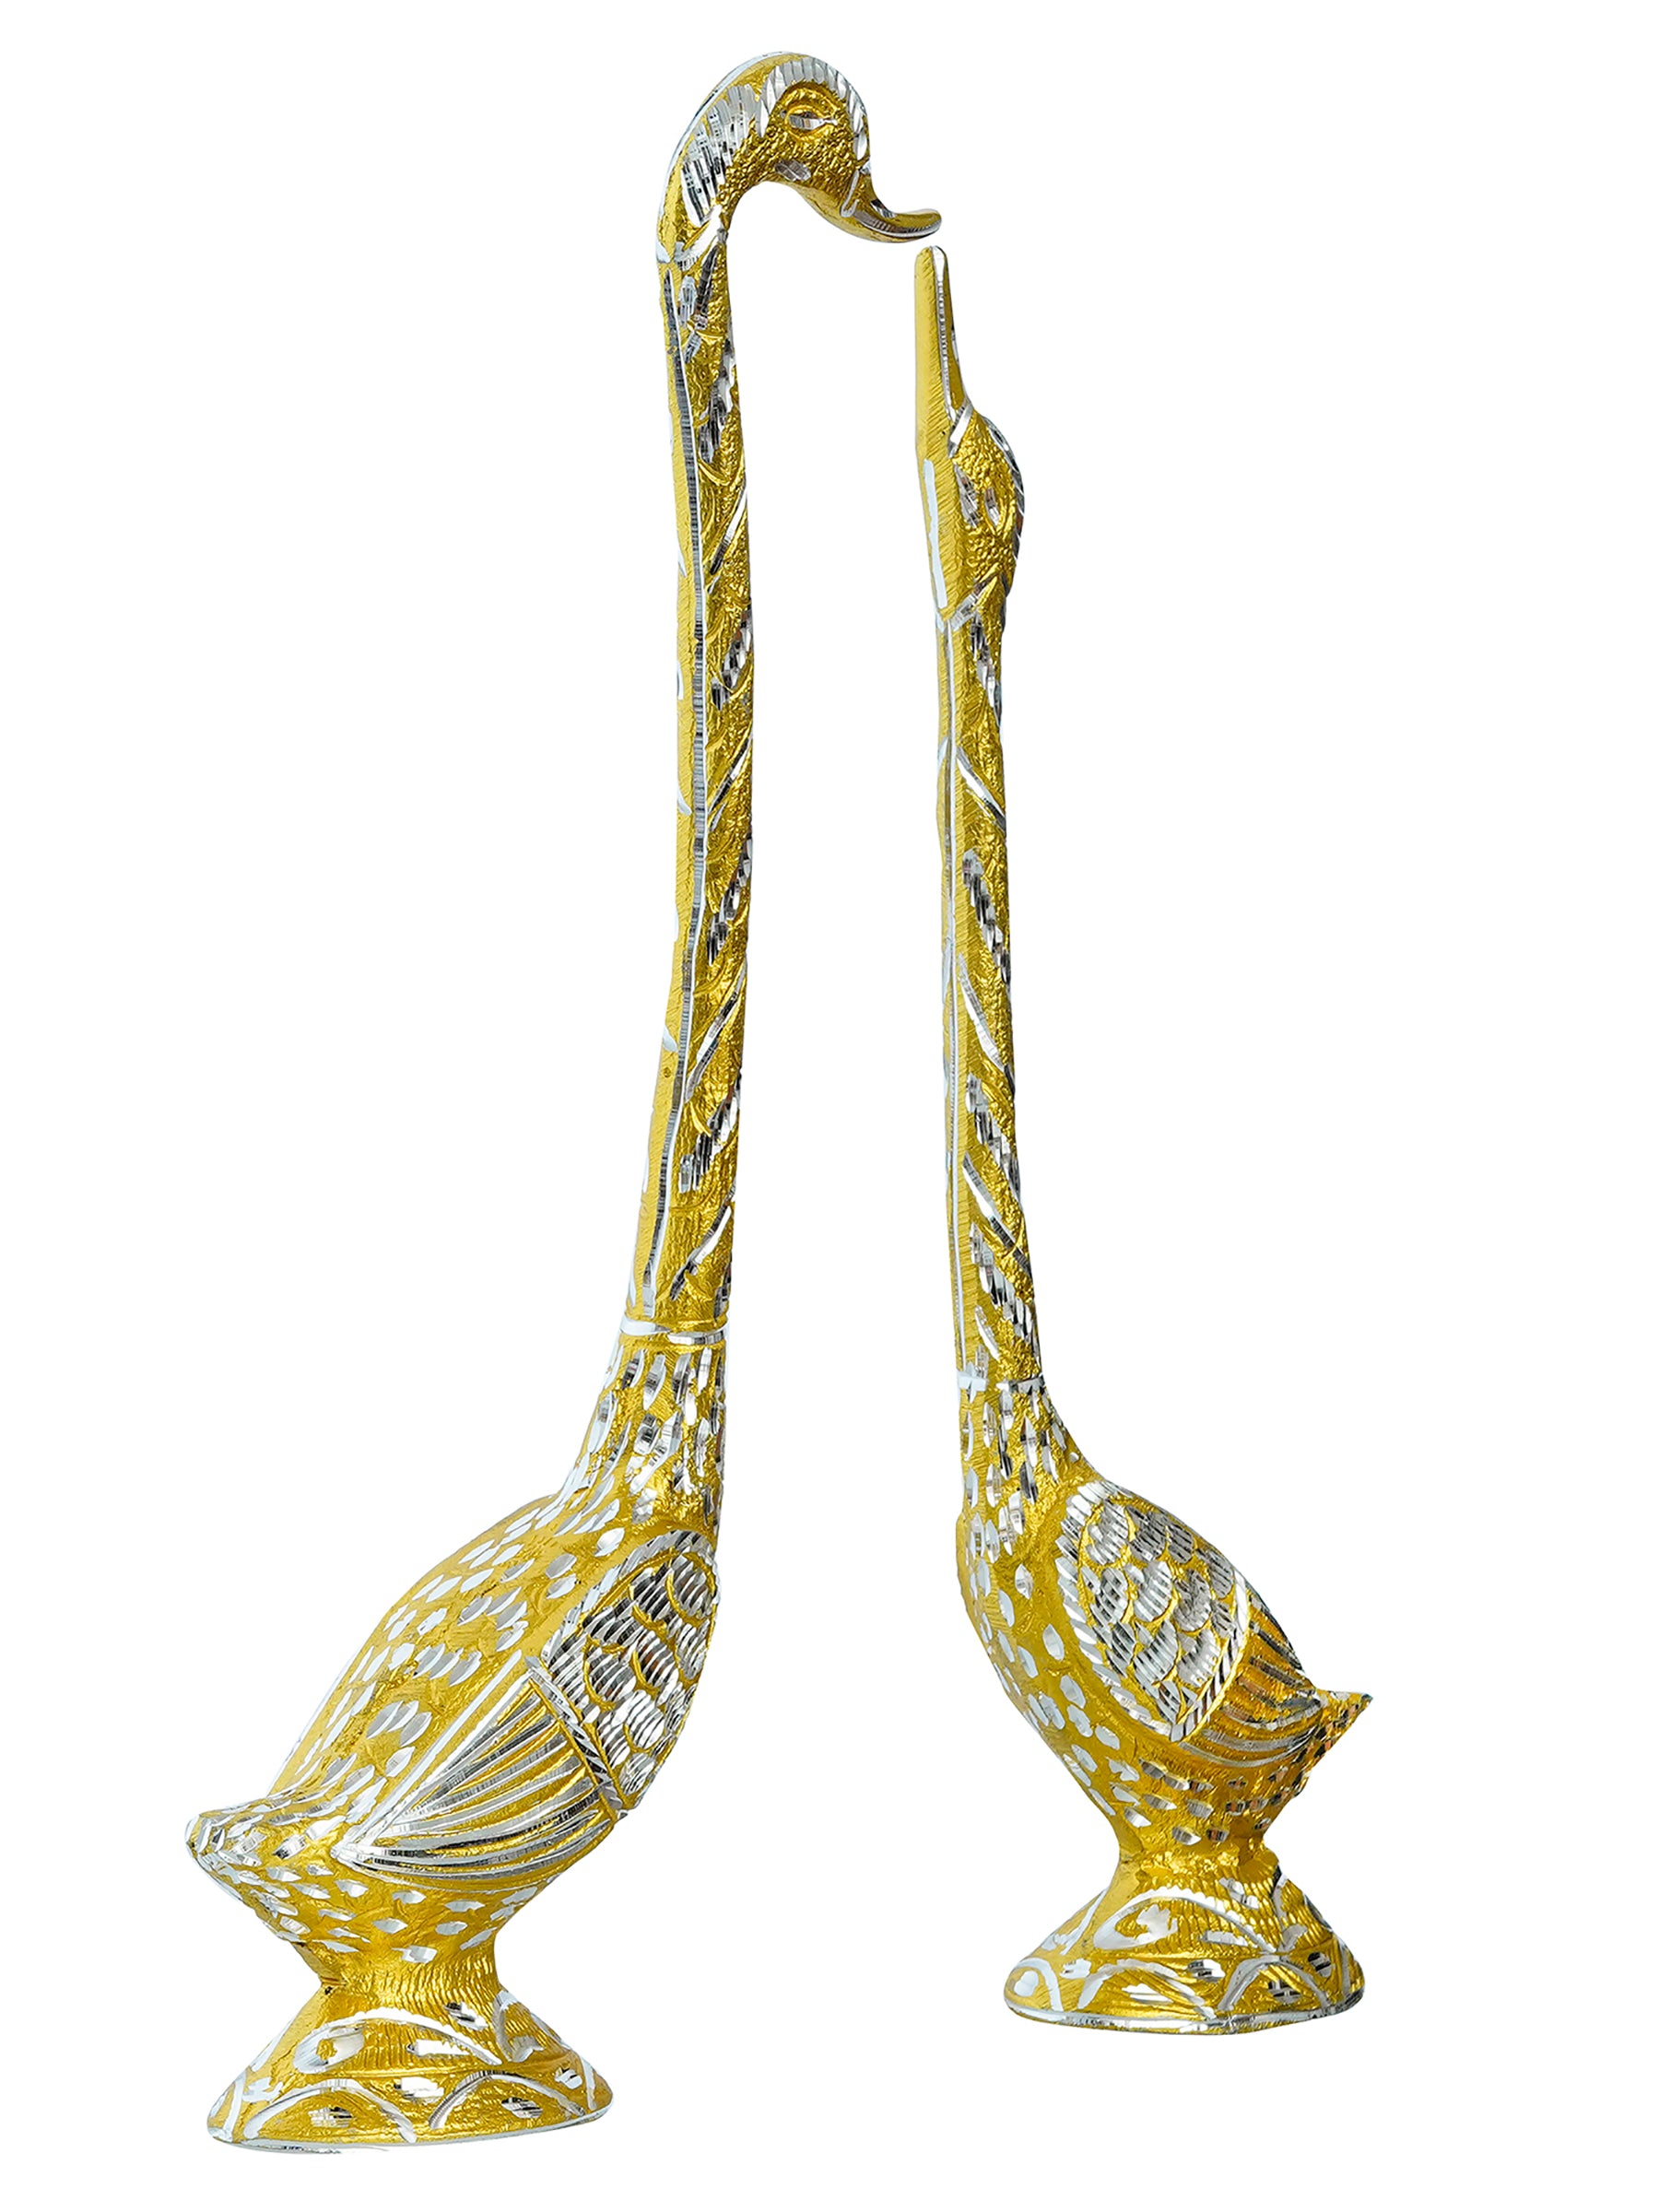 Golden Metal Kissing Swan Couple Handcrafted Decorative showpiece Love Bird Figurines 5